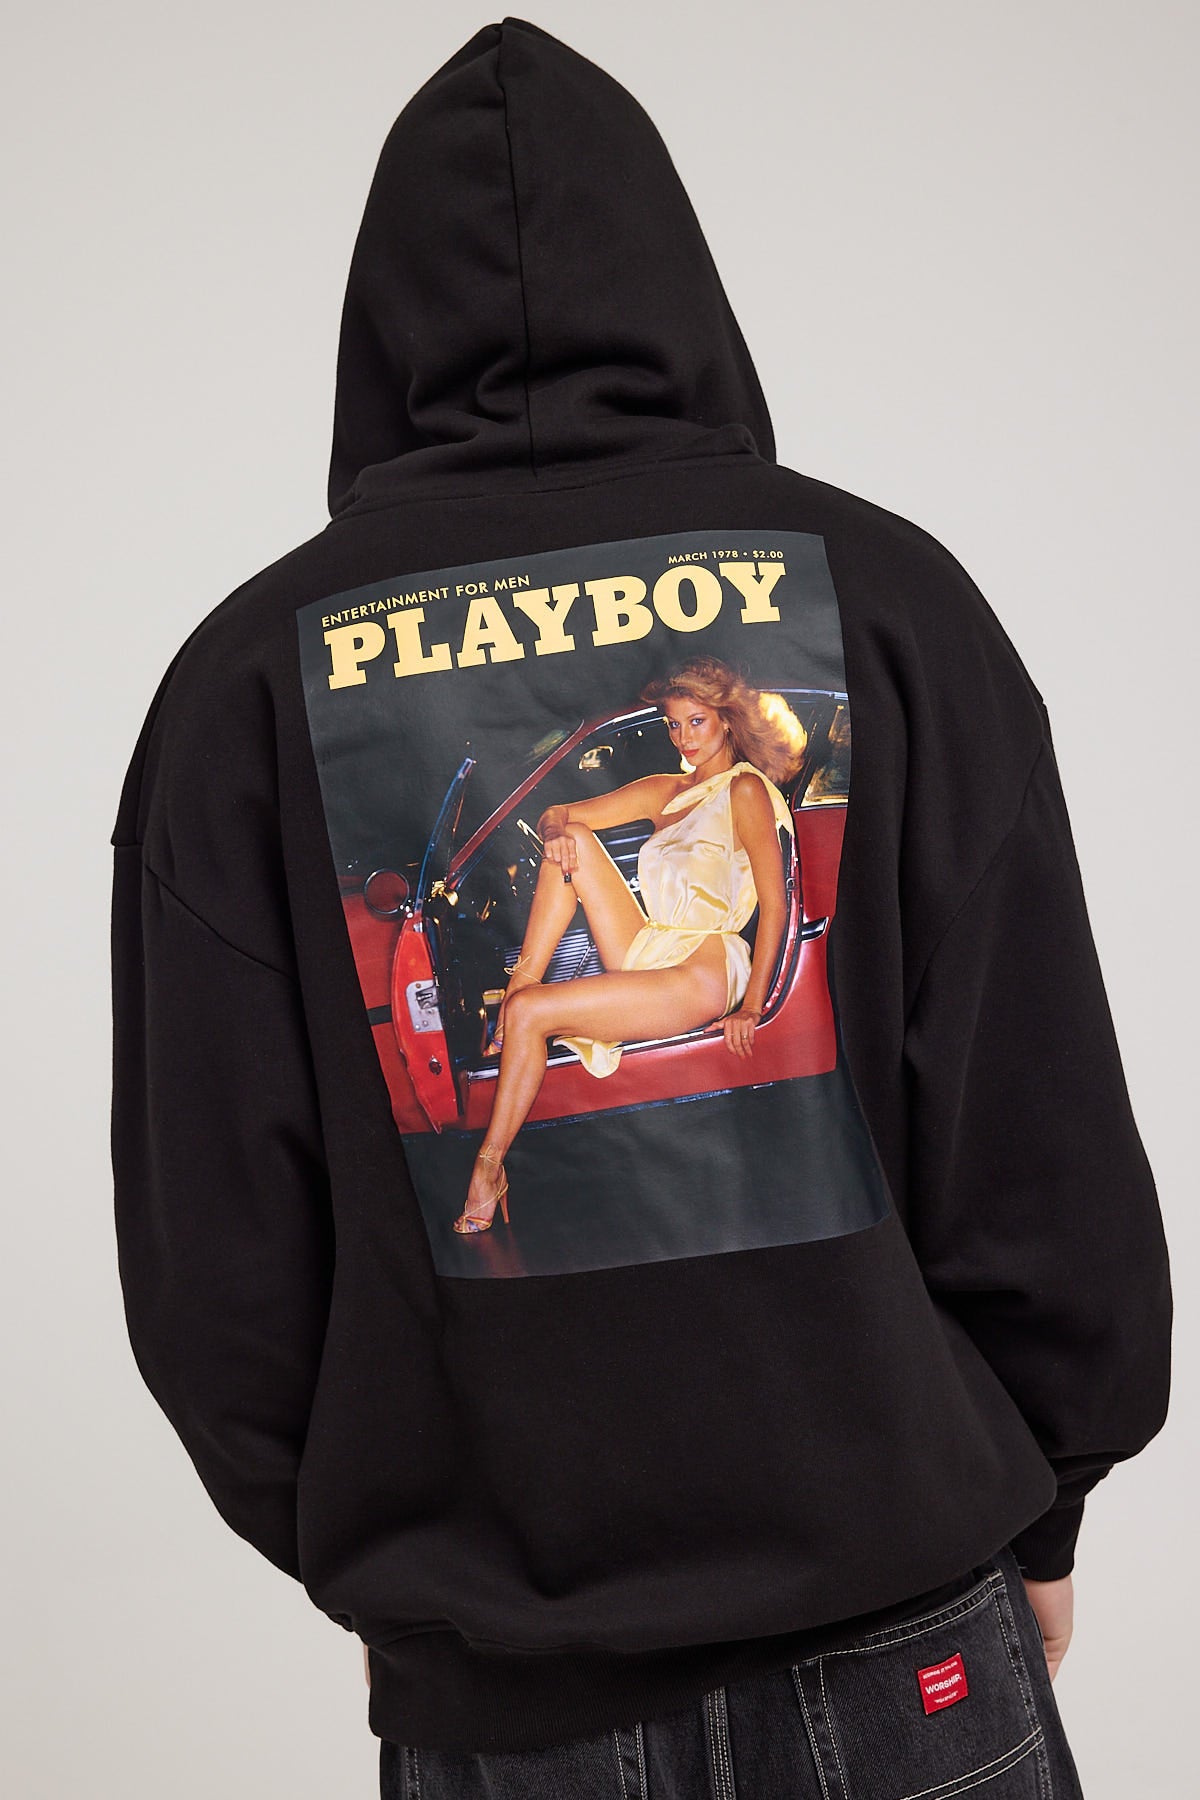 Playboy Playboy Covers Hoody Black